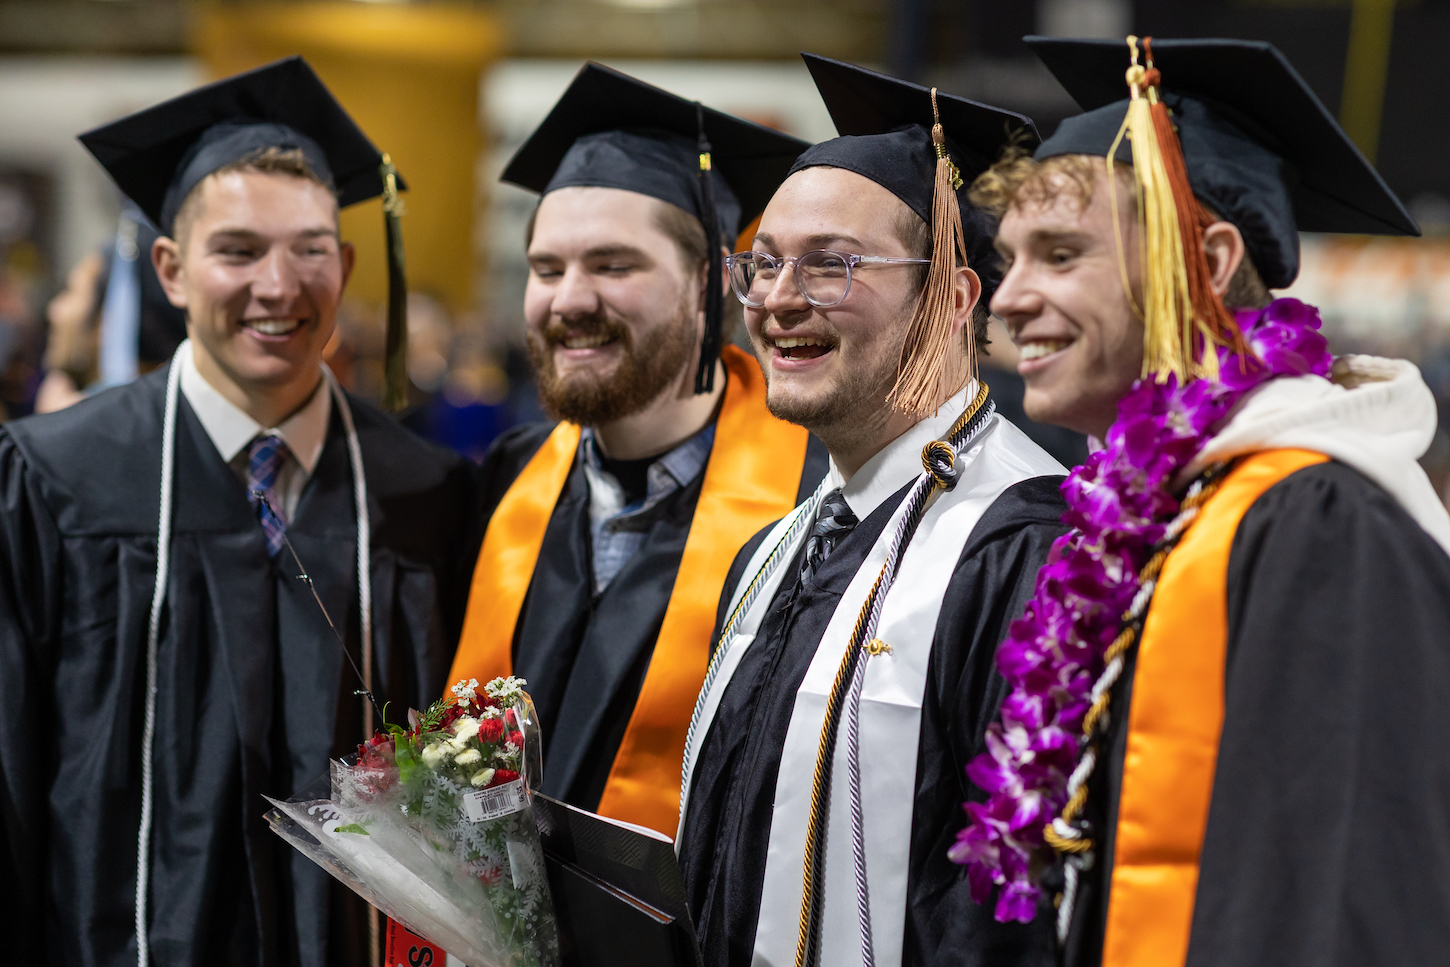 Four men in graduation regalia pose for a photo